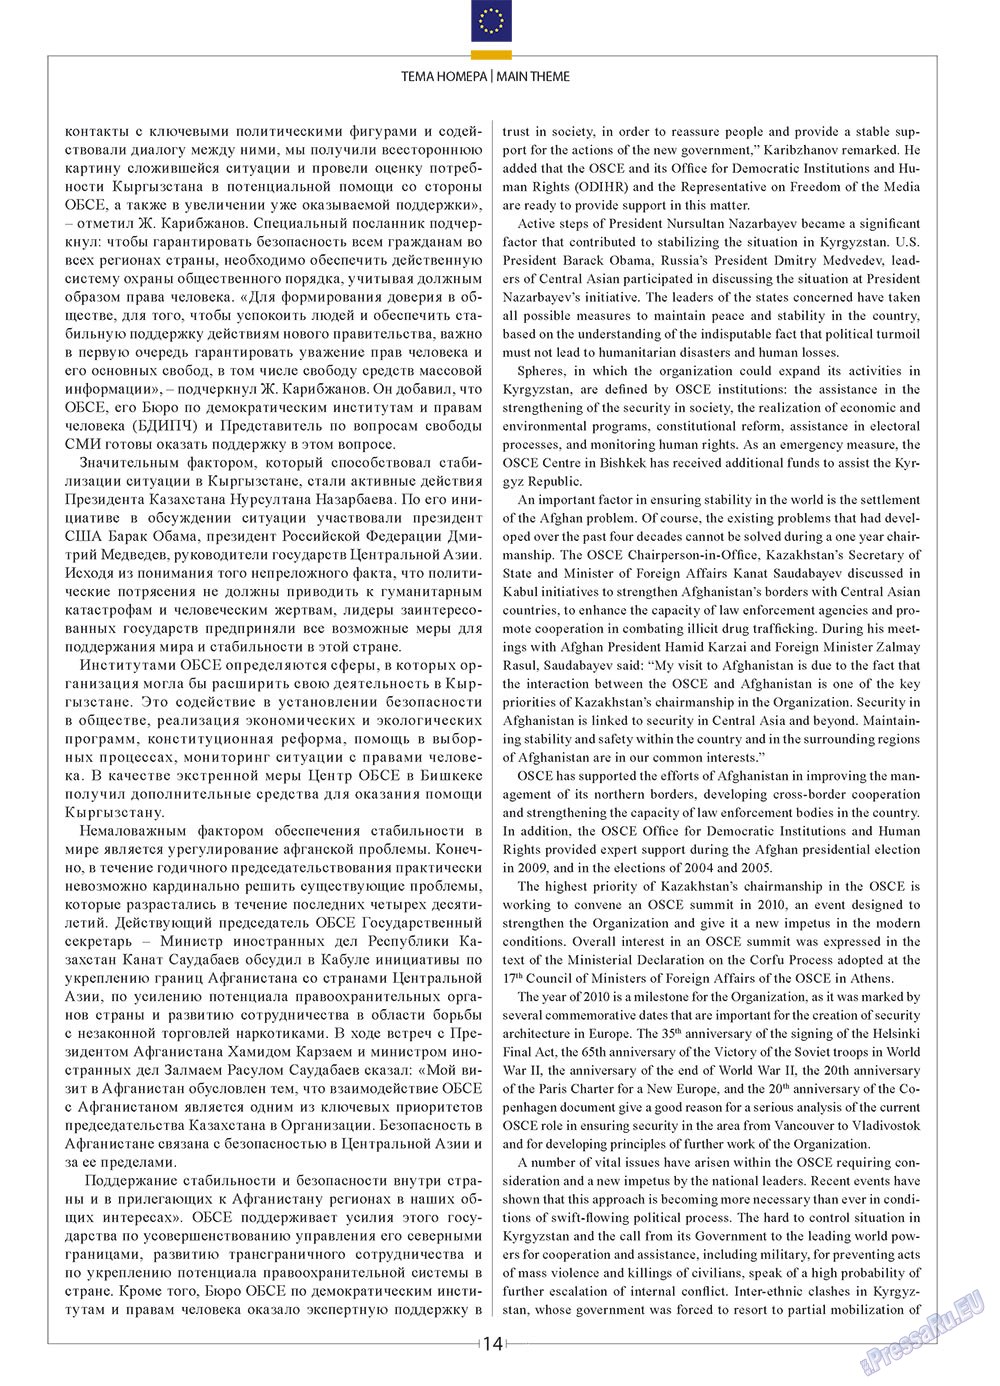 Европейский меридиан, журнал. 2010 №3 стр.16